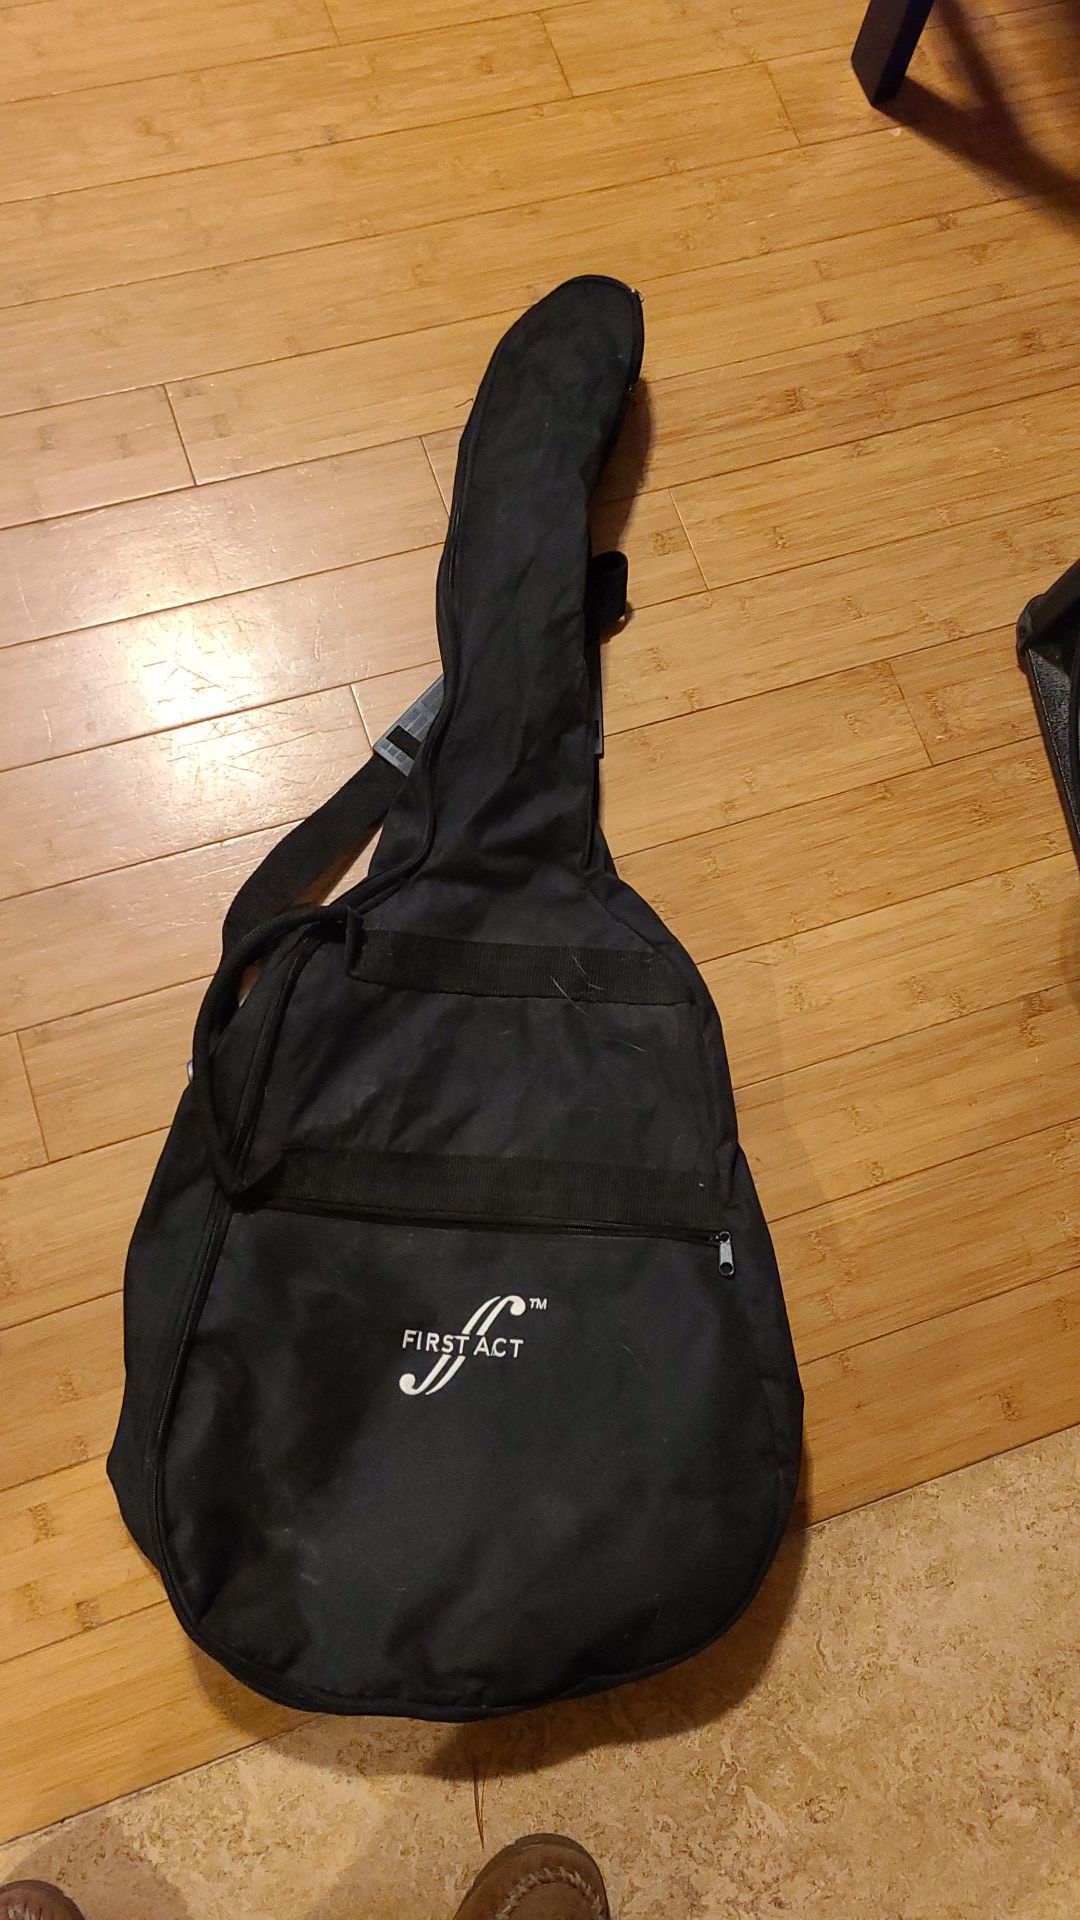 First act heavy guitar zippered bag & pocket